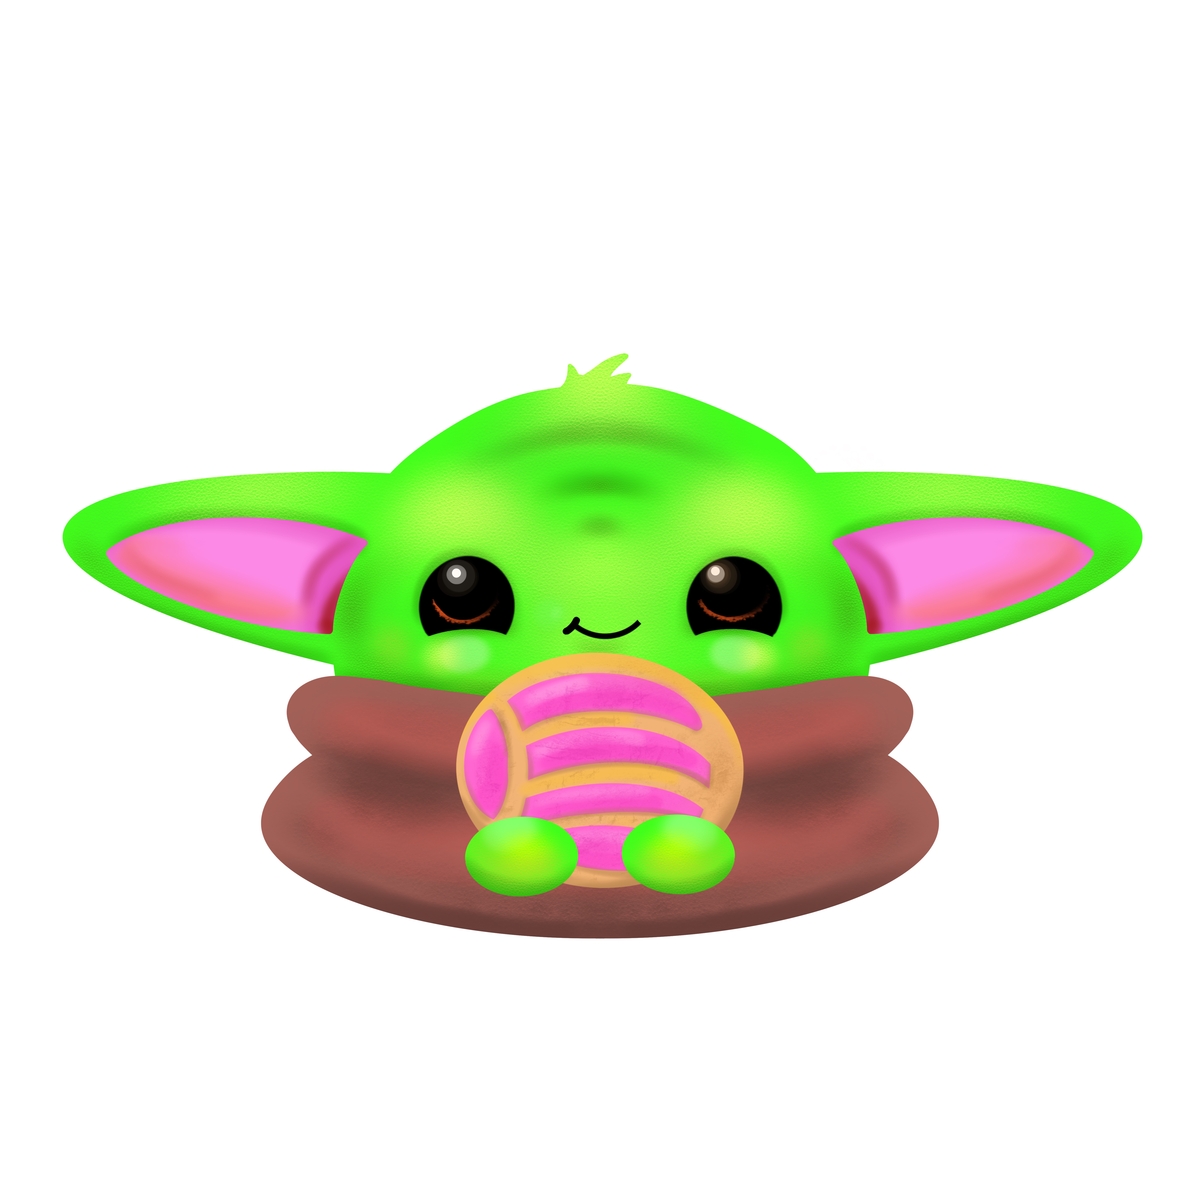 Cute Baby Yoda Graphic · Creative Fabrica